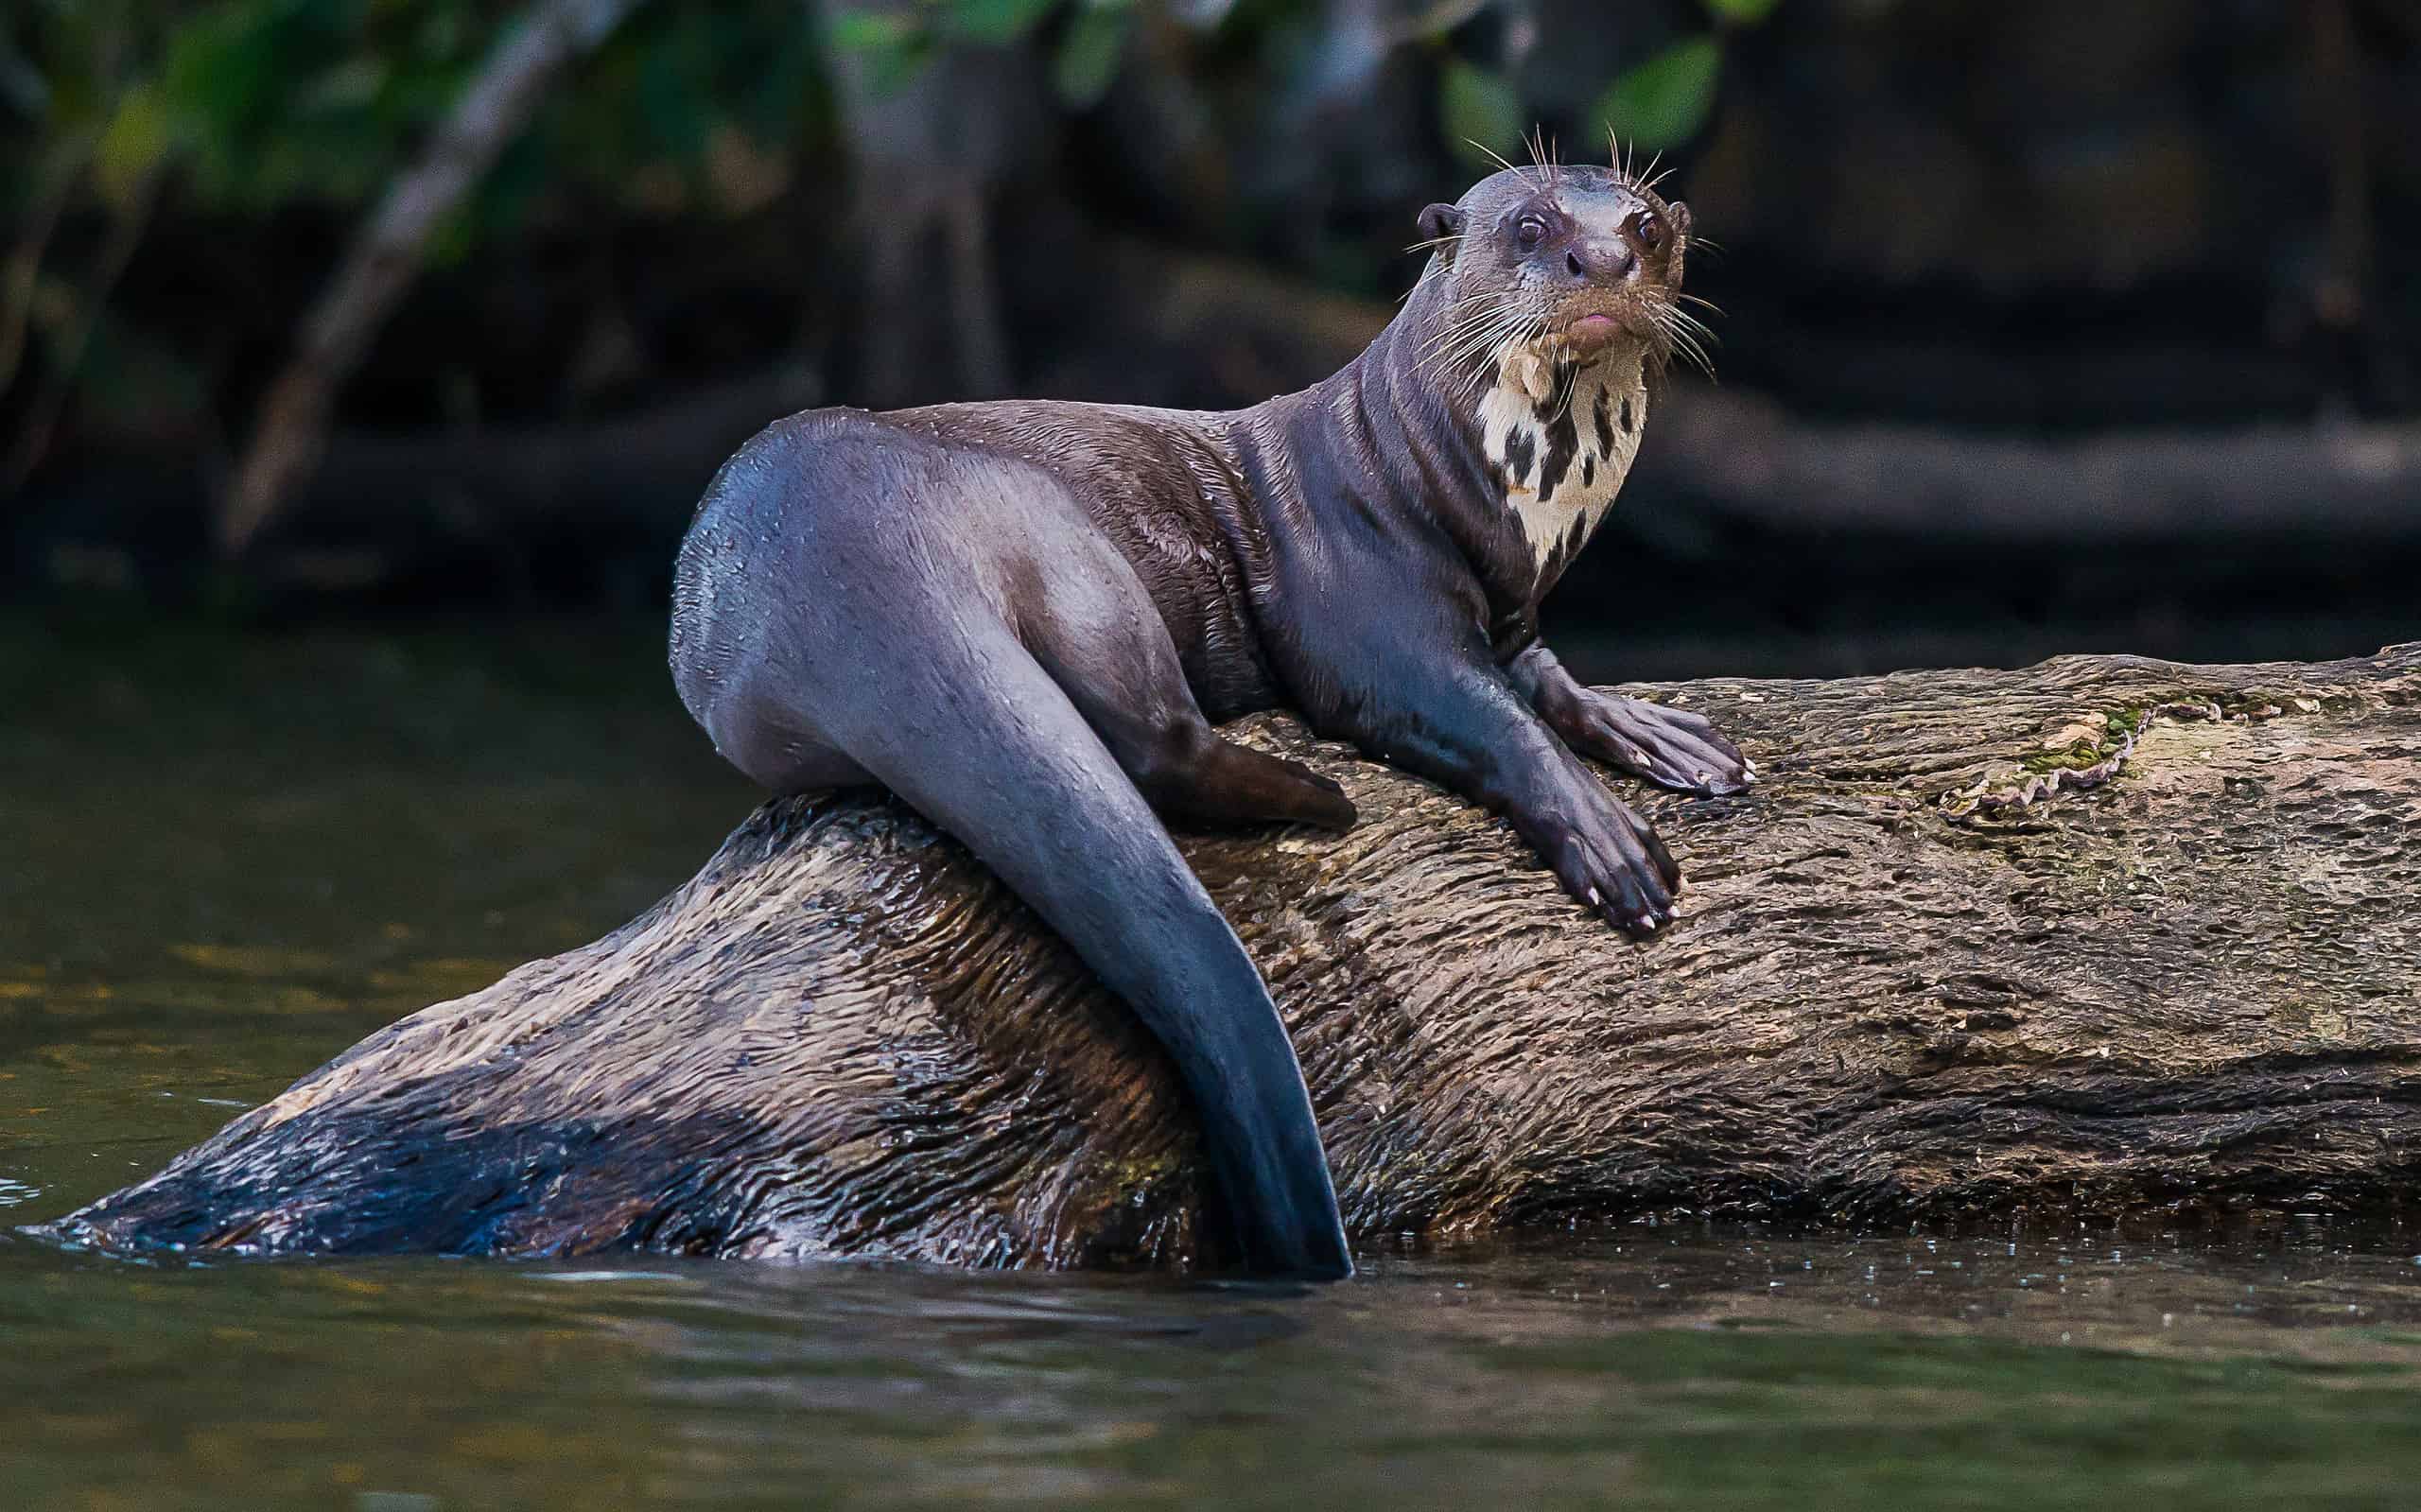 Giant otter standing log peruvian Amazonian jungle Madre de Dios